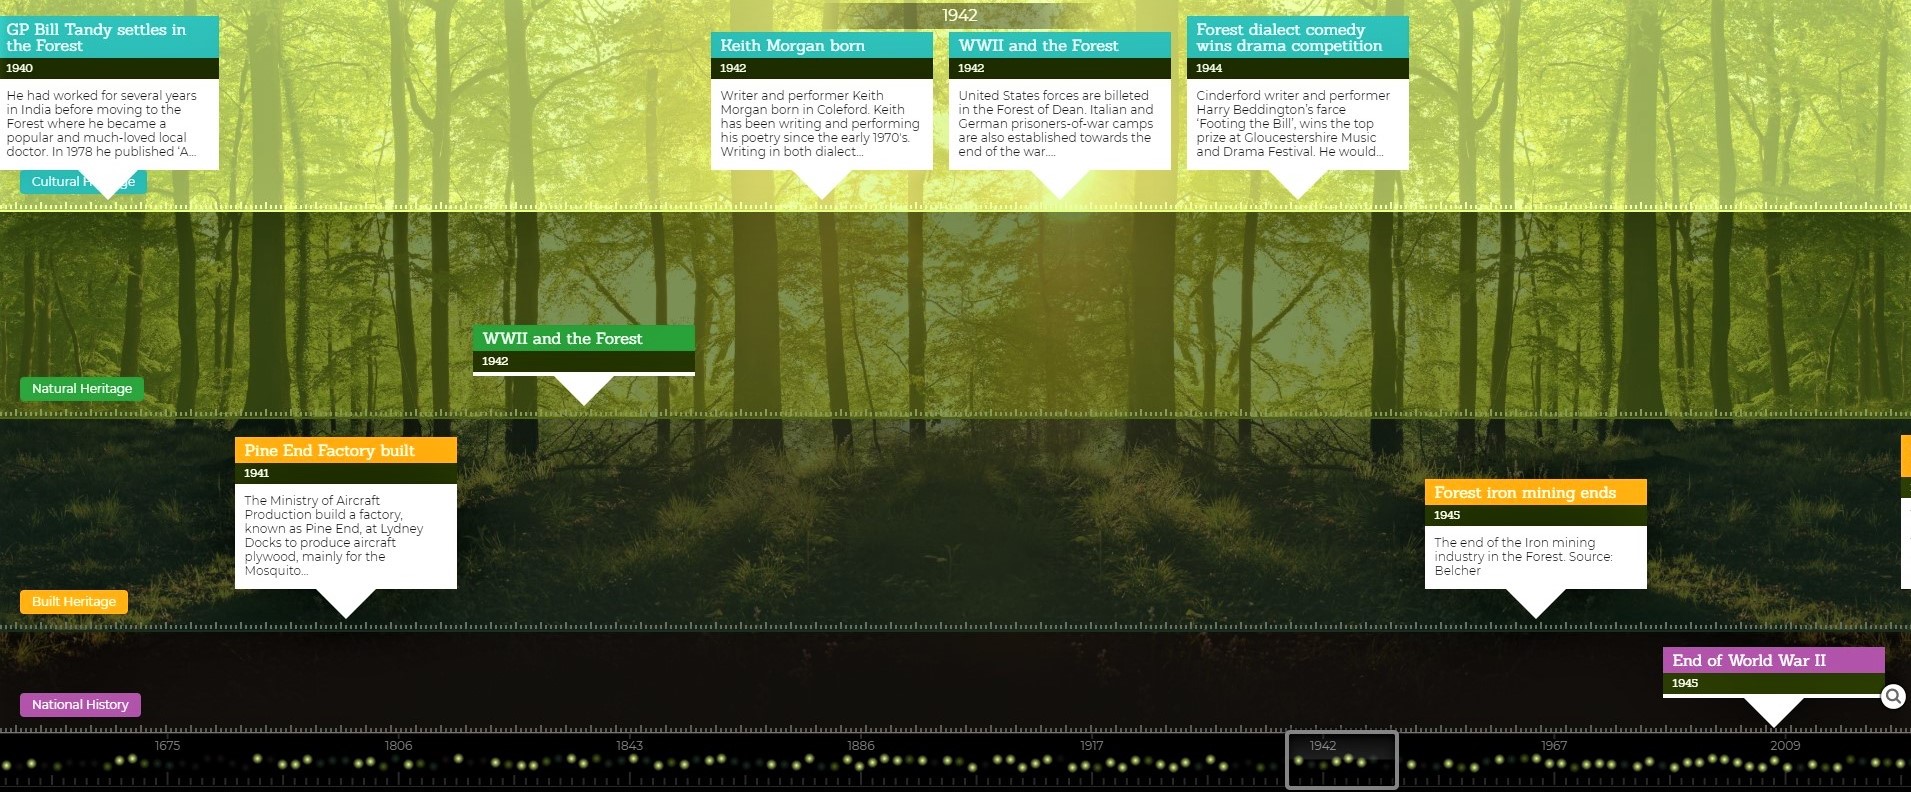 Forest of Dean timeline